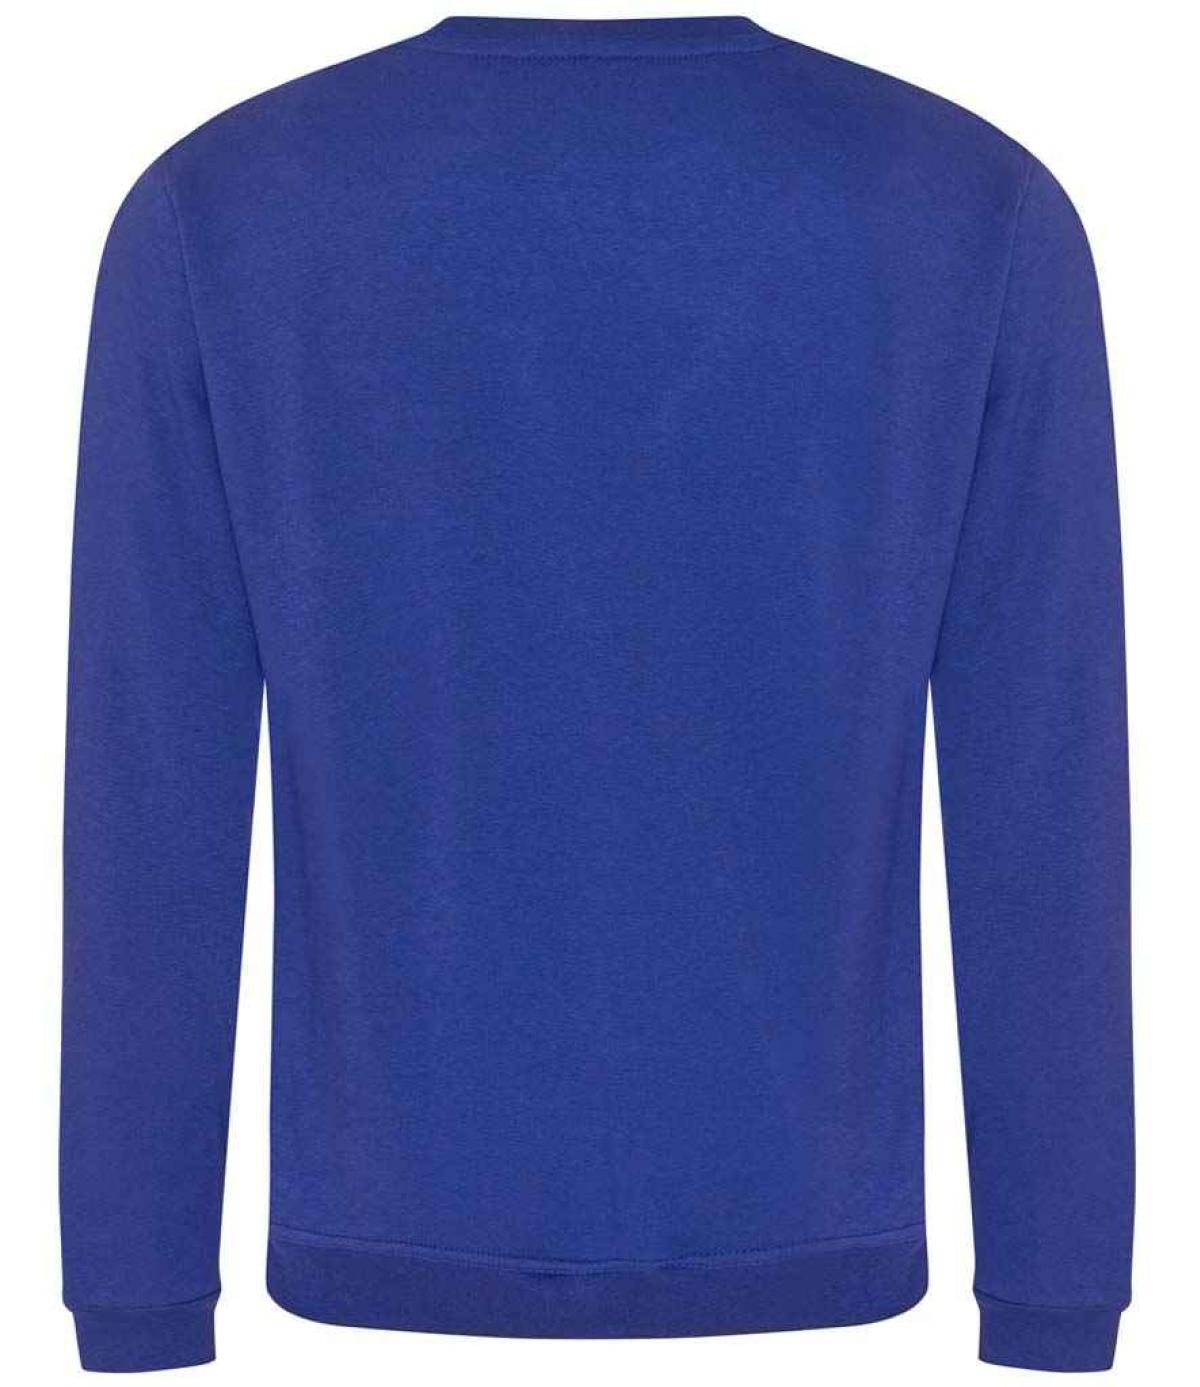 Pro RTX Pro Sweatshirt - Royal Blue | Order Uniform UK Ltd